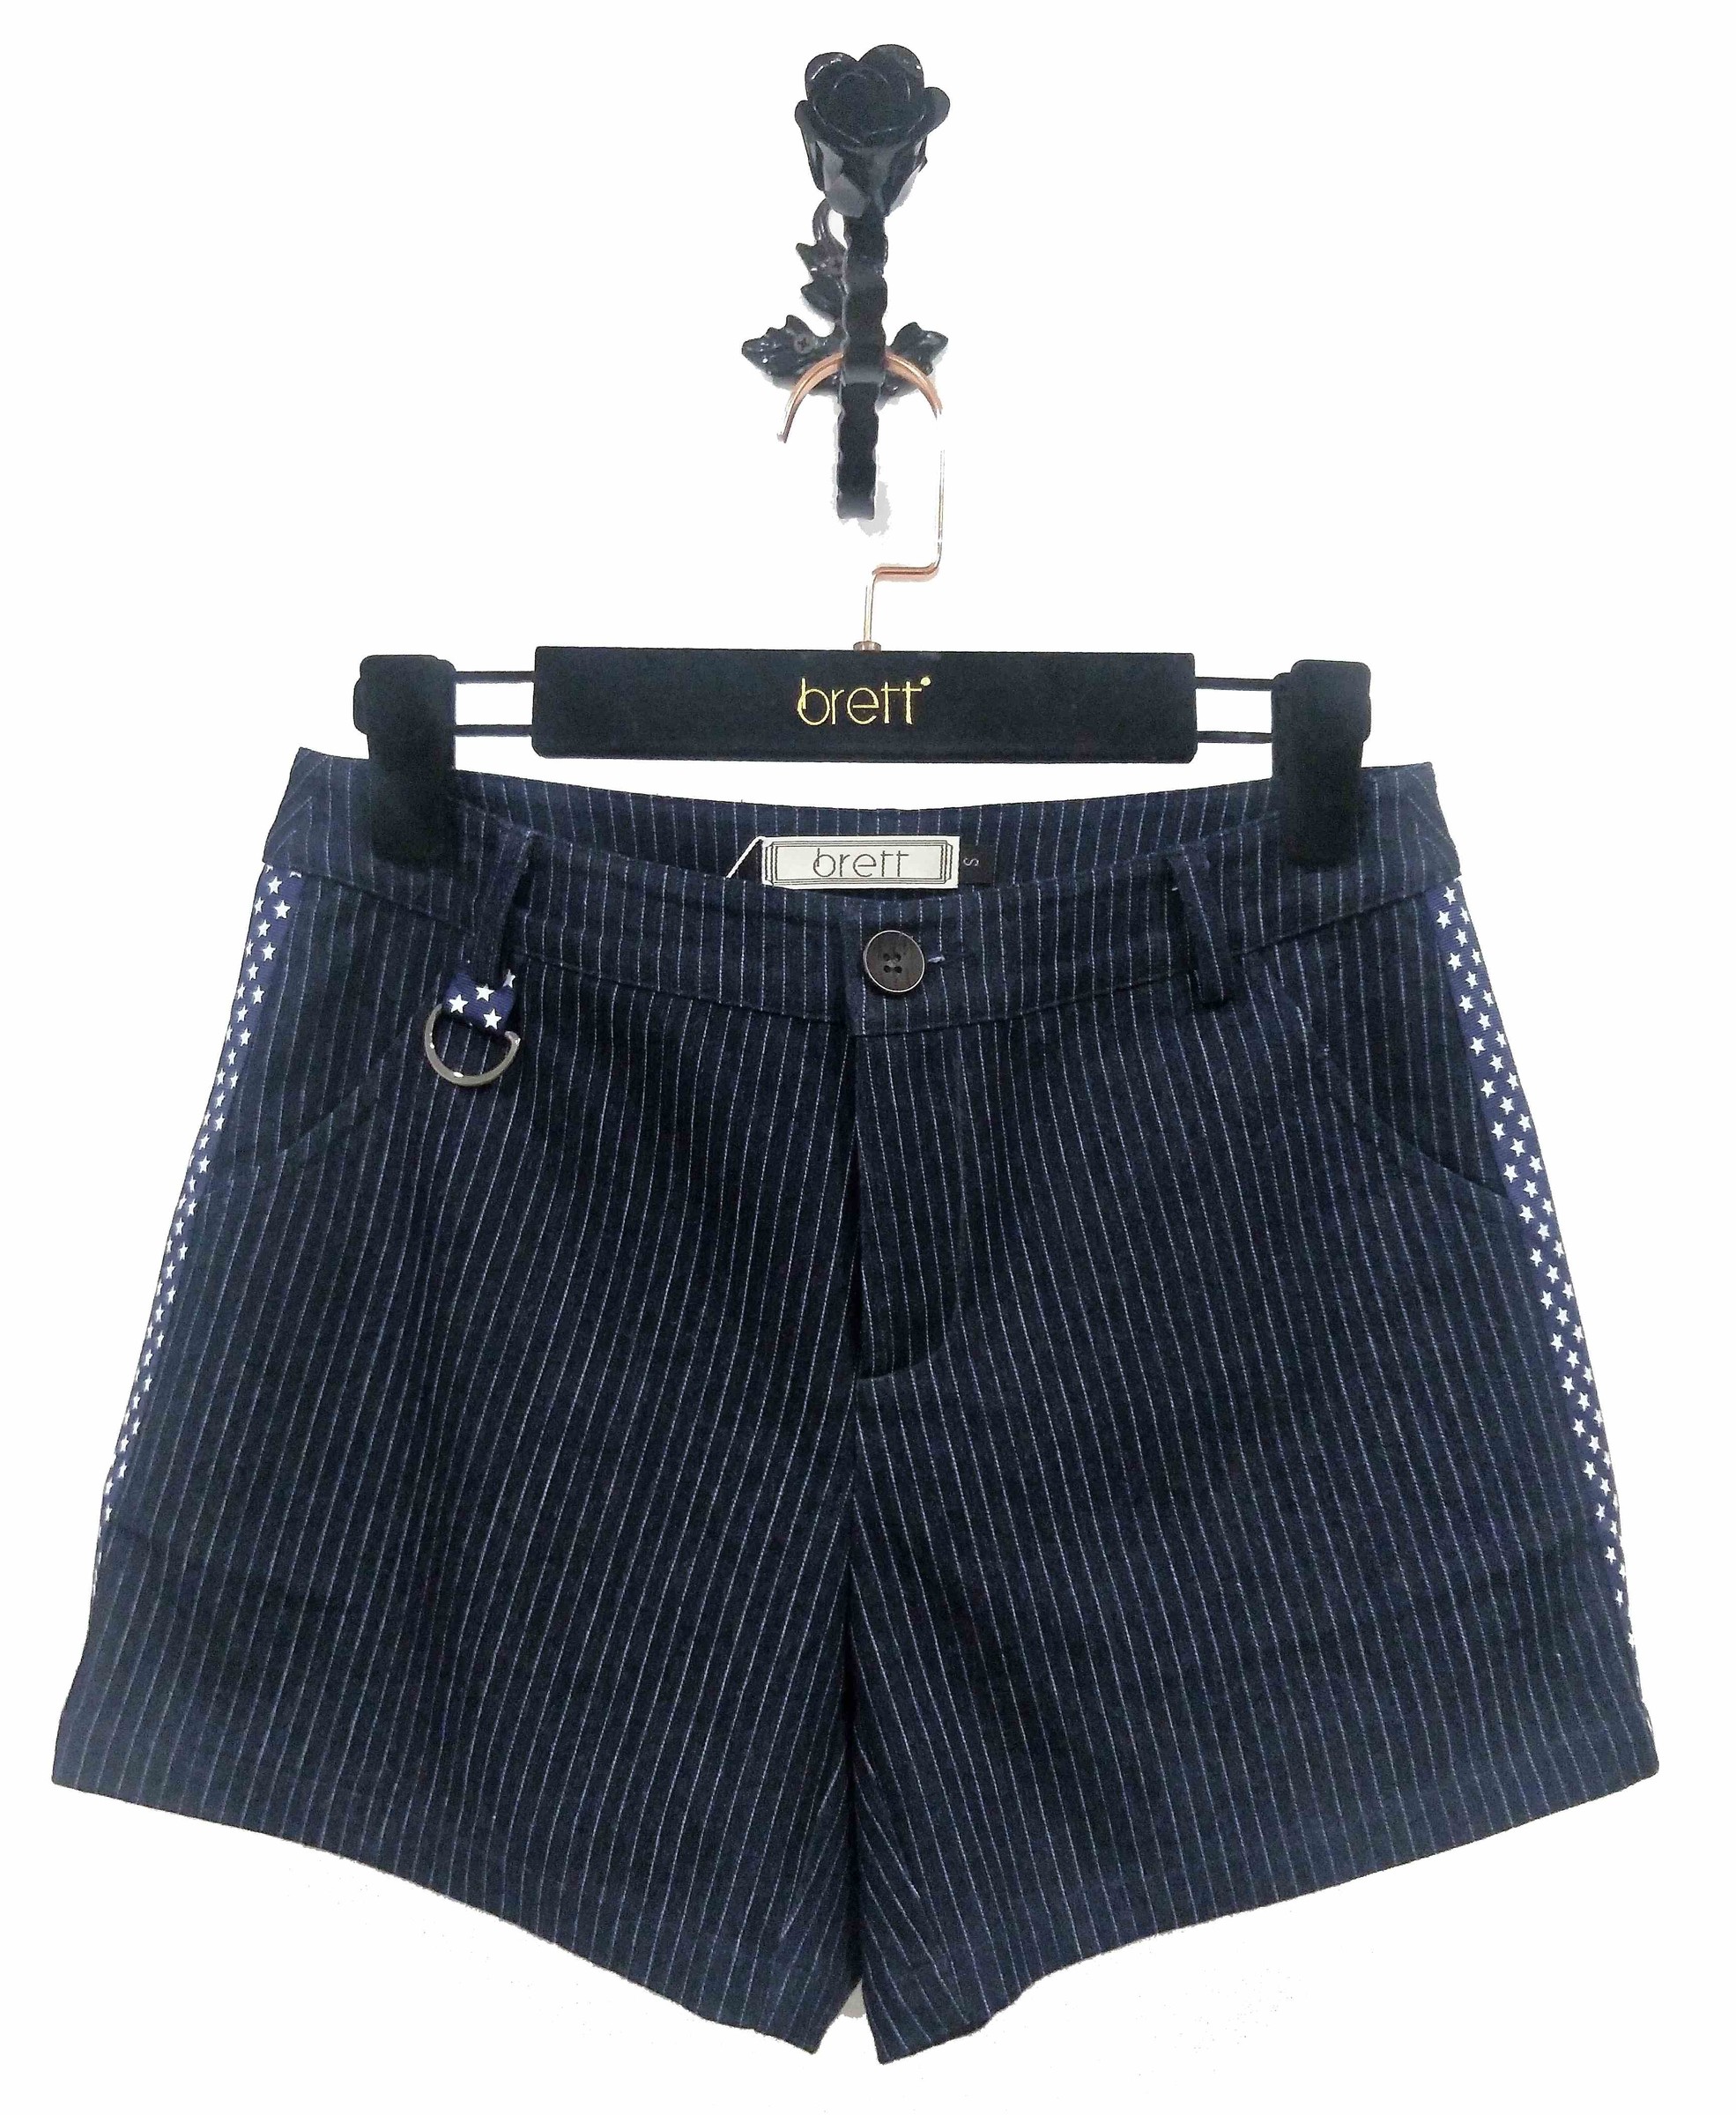 White star hem pattern shorts with striped shorts in navy ladies fashion for mini shorts (6).jpg